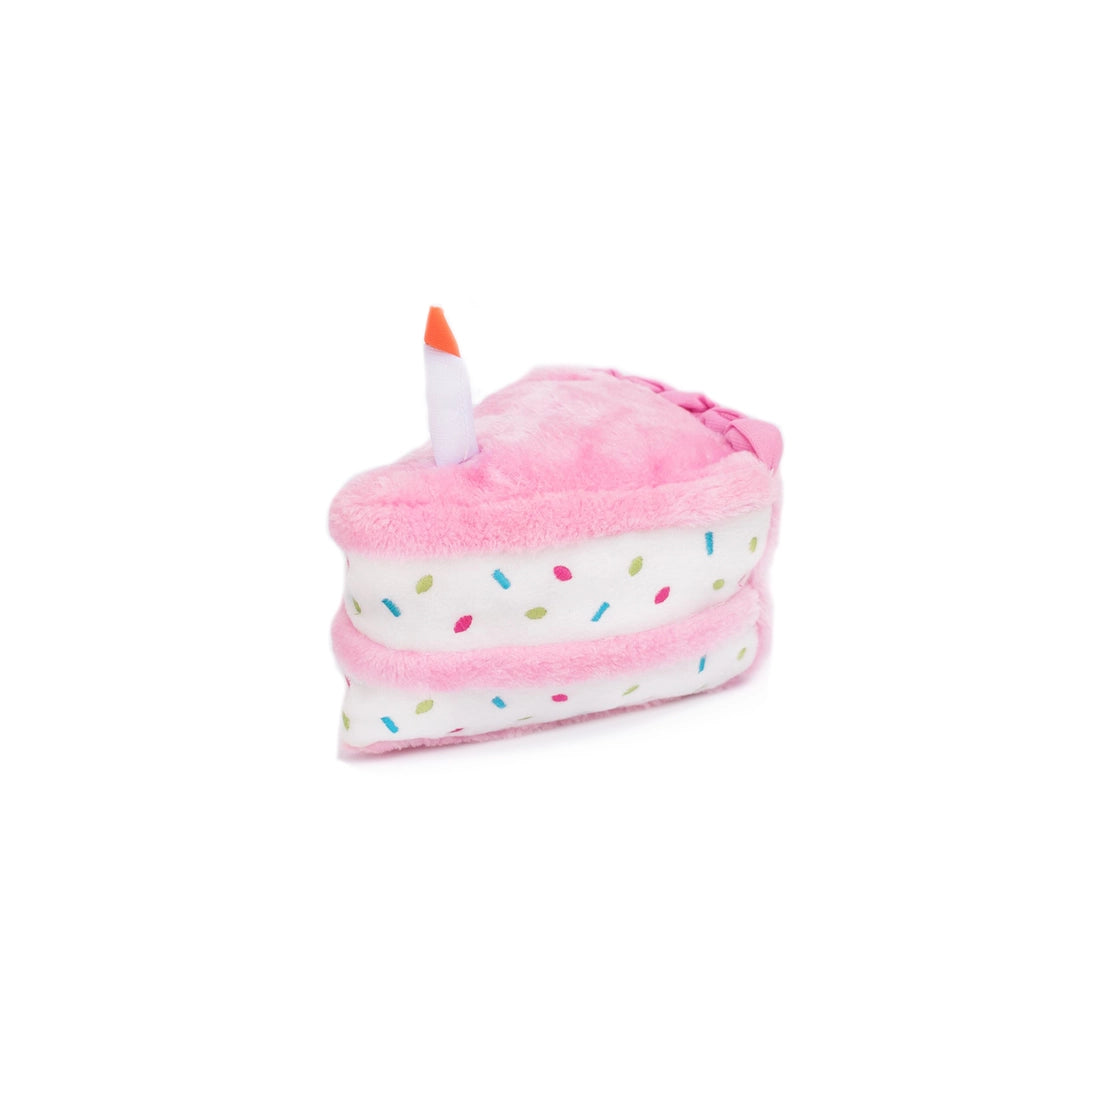 pink, plush birthday cake slice shaped dog toy